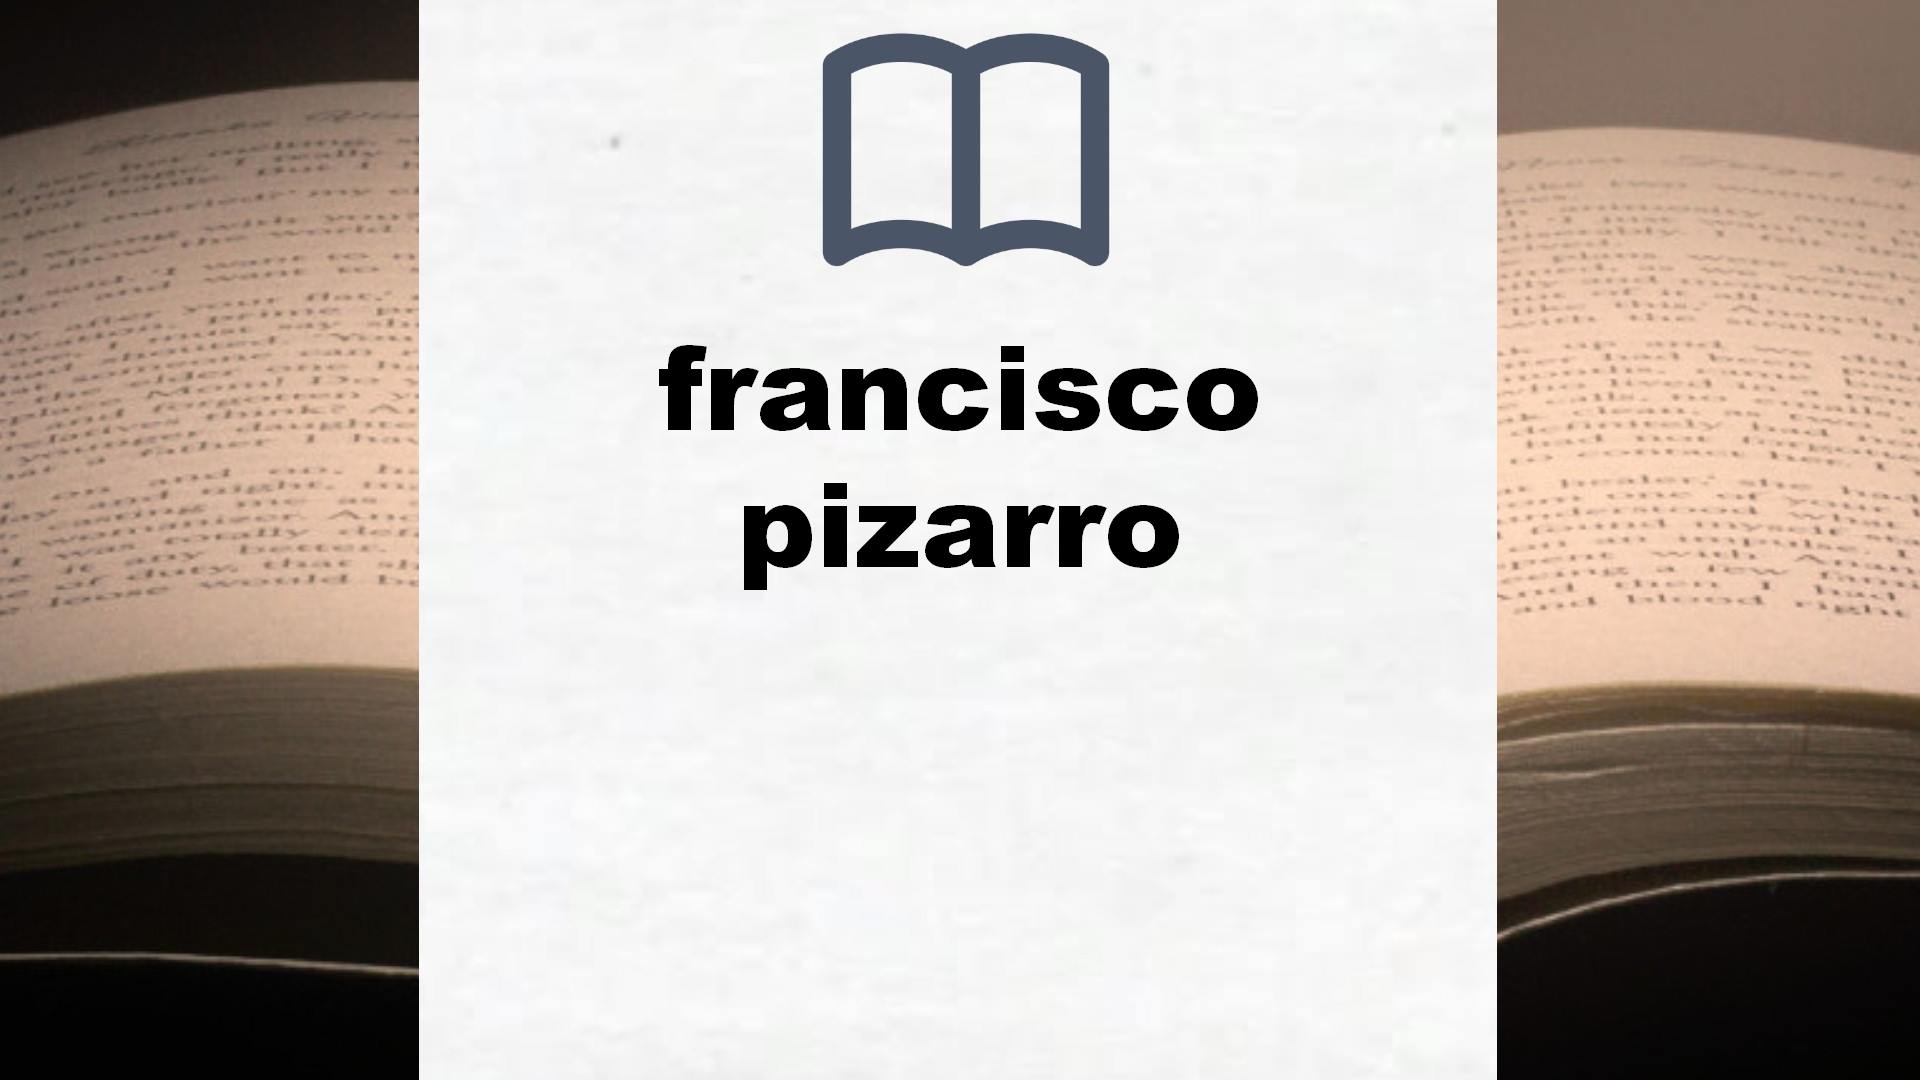 Libros sobre francisco pizarro